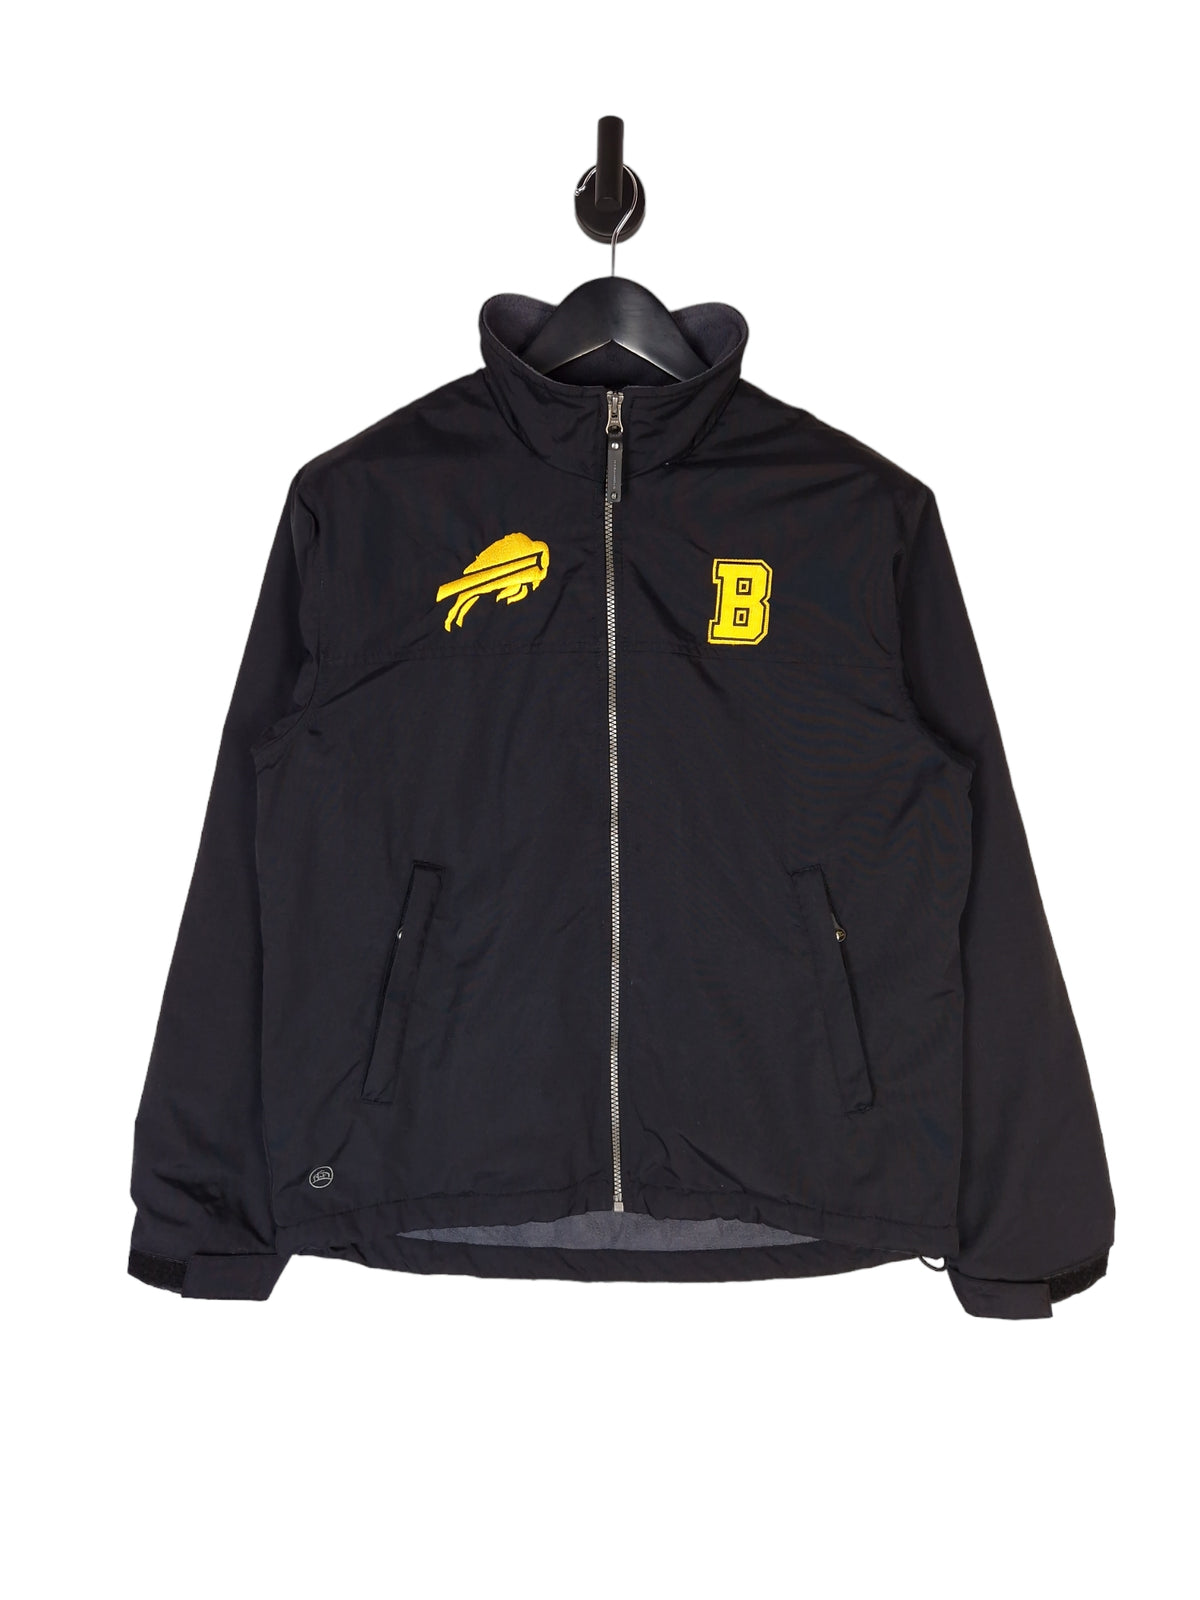 Stormtech Buffalo Bills Soft Jacket - Size Medium